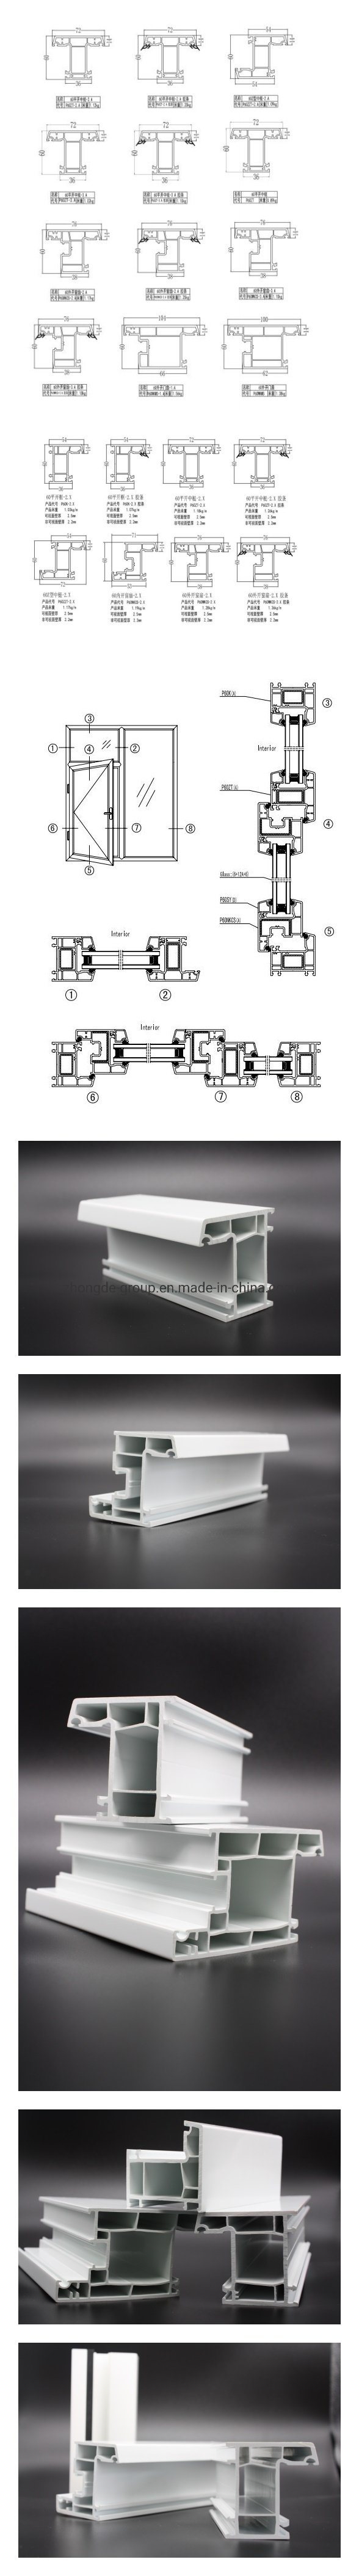 Zhongde Hot Sales OEM Extrusion UPVC Window Profile Angle Corner Plastic Profiles UPVC Material Plastic Profile